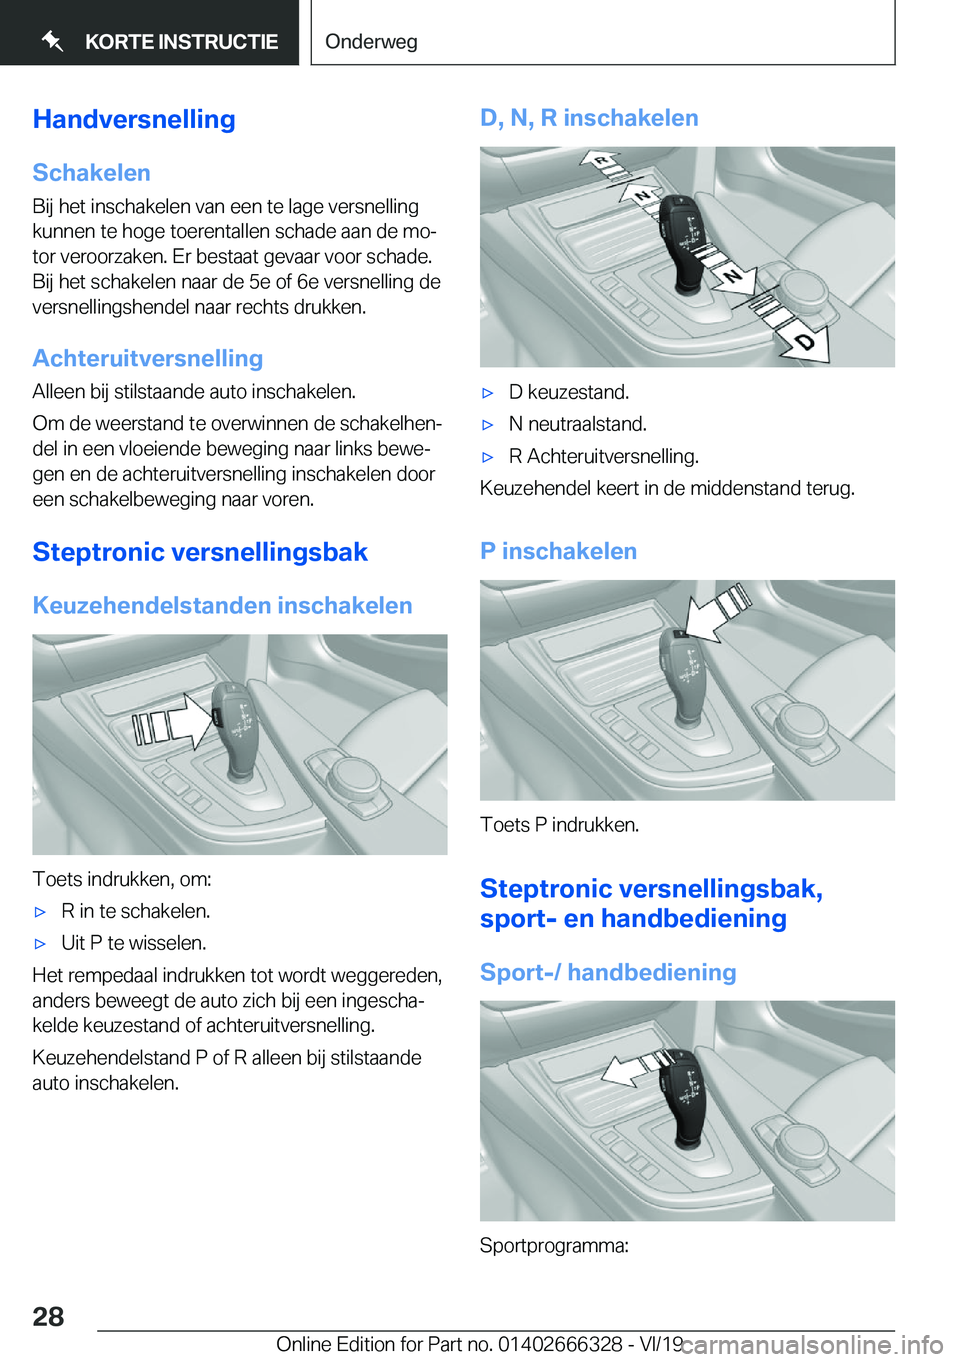 BMW 4 SERIES COUPE 2020  Instructieboekjes (in Dutch) �H�a�n�d�v�e�r�s�n�e�l�l�i�n�g
�S�c�h�a�k�e�l�e�n
�B�i�j��h�e�t��i�n�s�c�h�a�k�e�l�e�n��v�a�n��e�e�n��t�e��l�a�g�e��v�e�r�s�n�e�l�l�i�n�g �k�u�n�n�e�n��t�e��h�o�g�e��t�o�e�r�e�n�t�a�l�l�e�n�